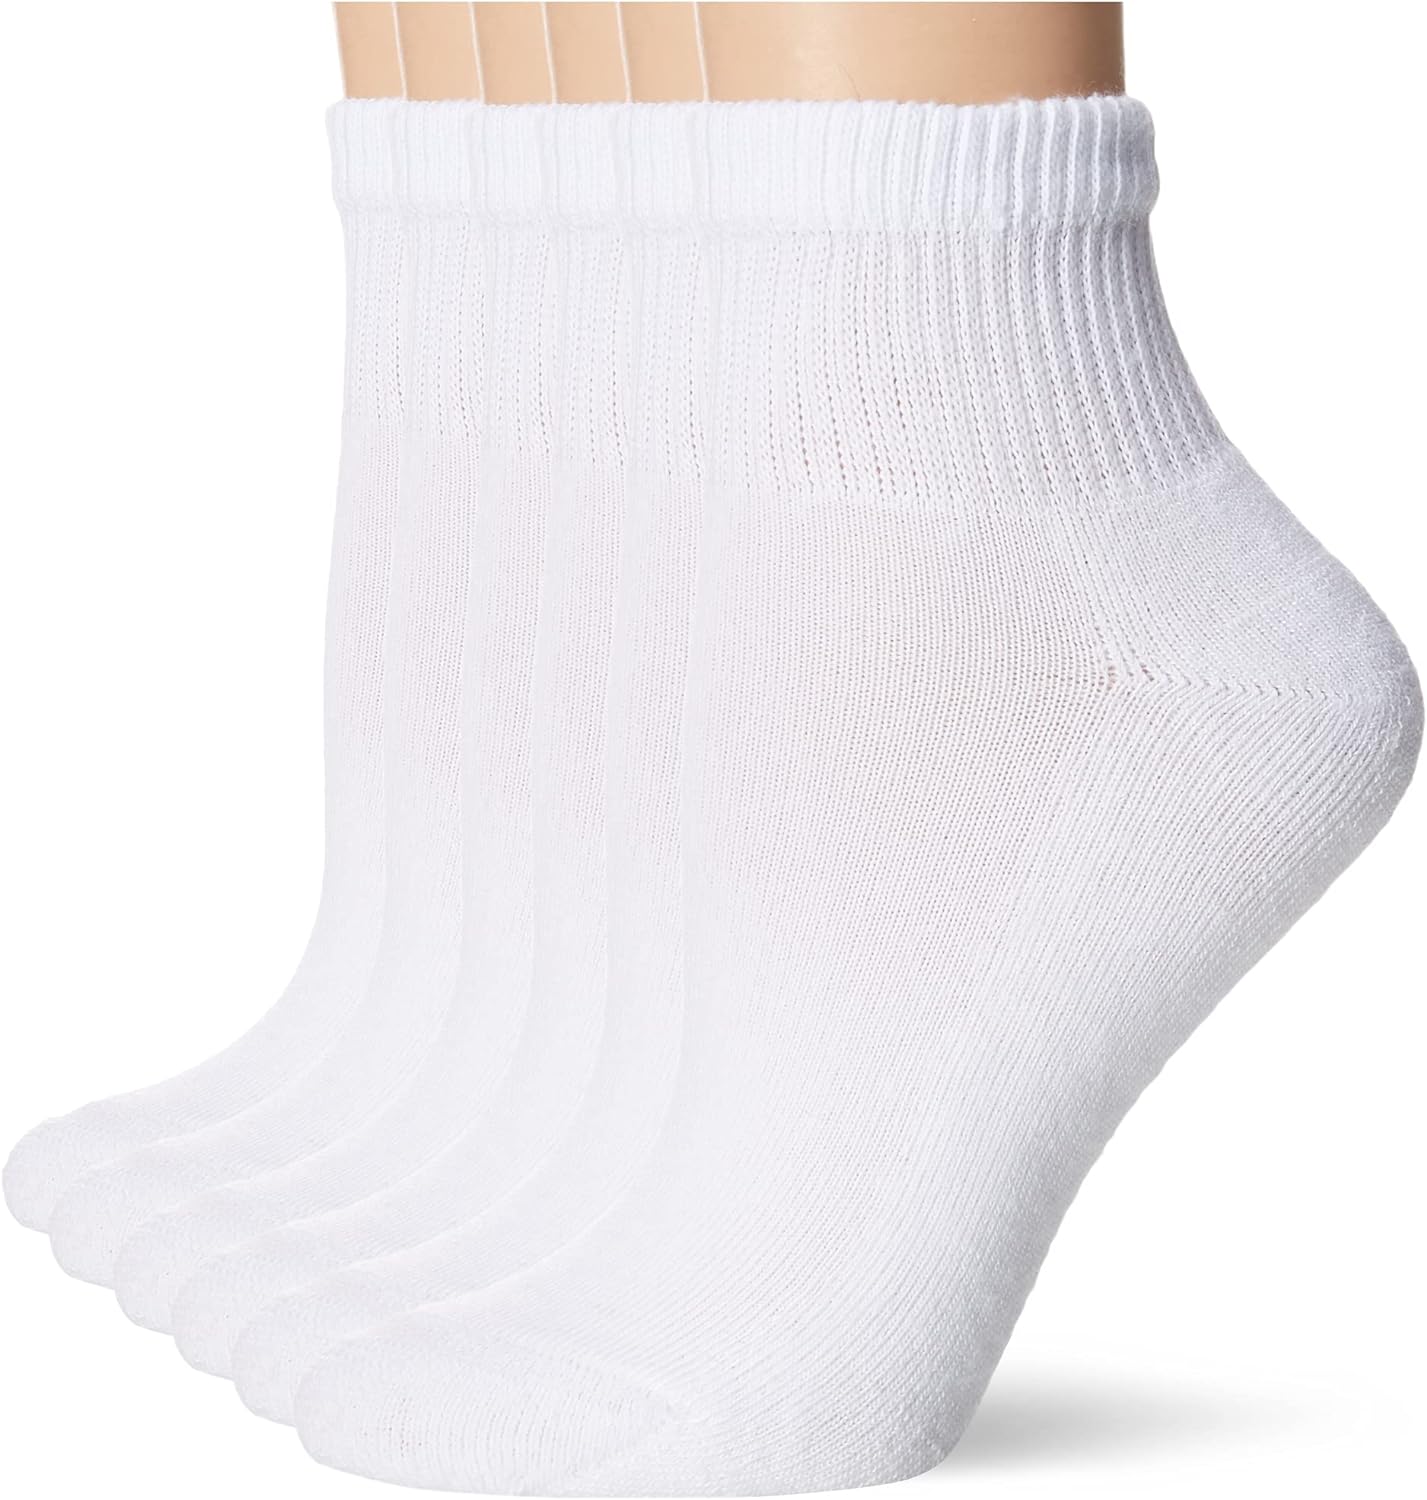 Hanes womens Ultimate Comfort Toe Seamed Ankle Socks